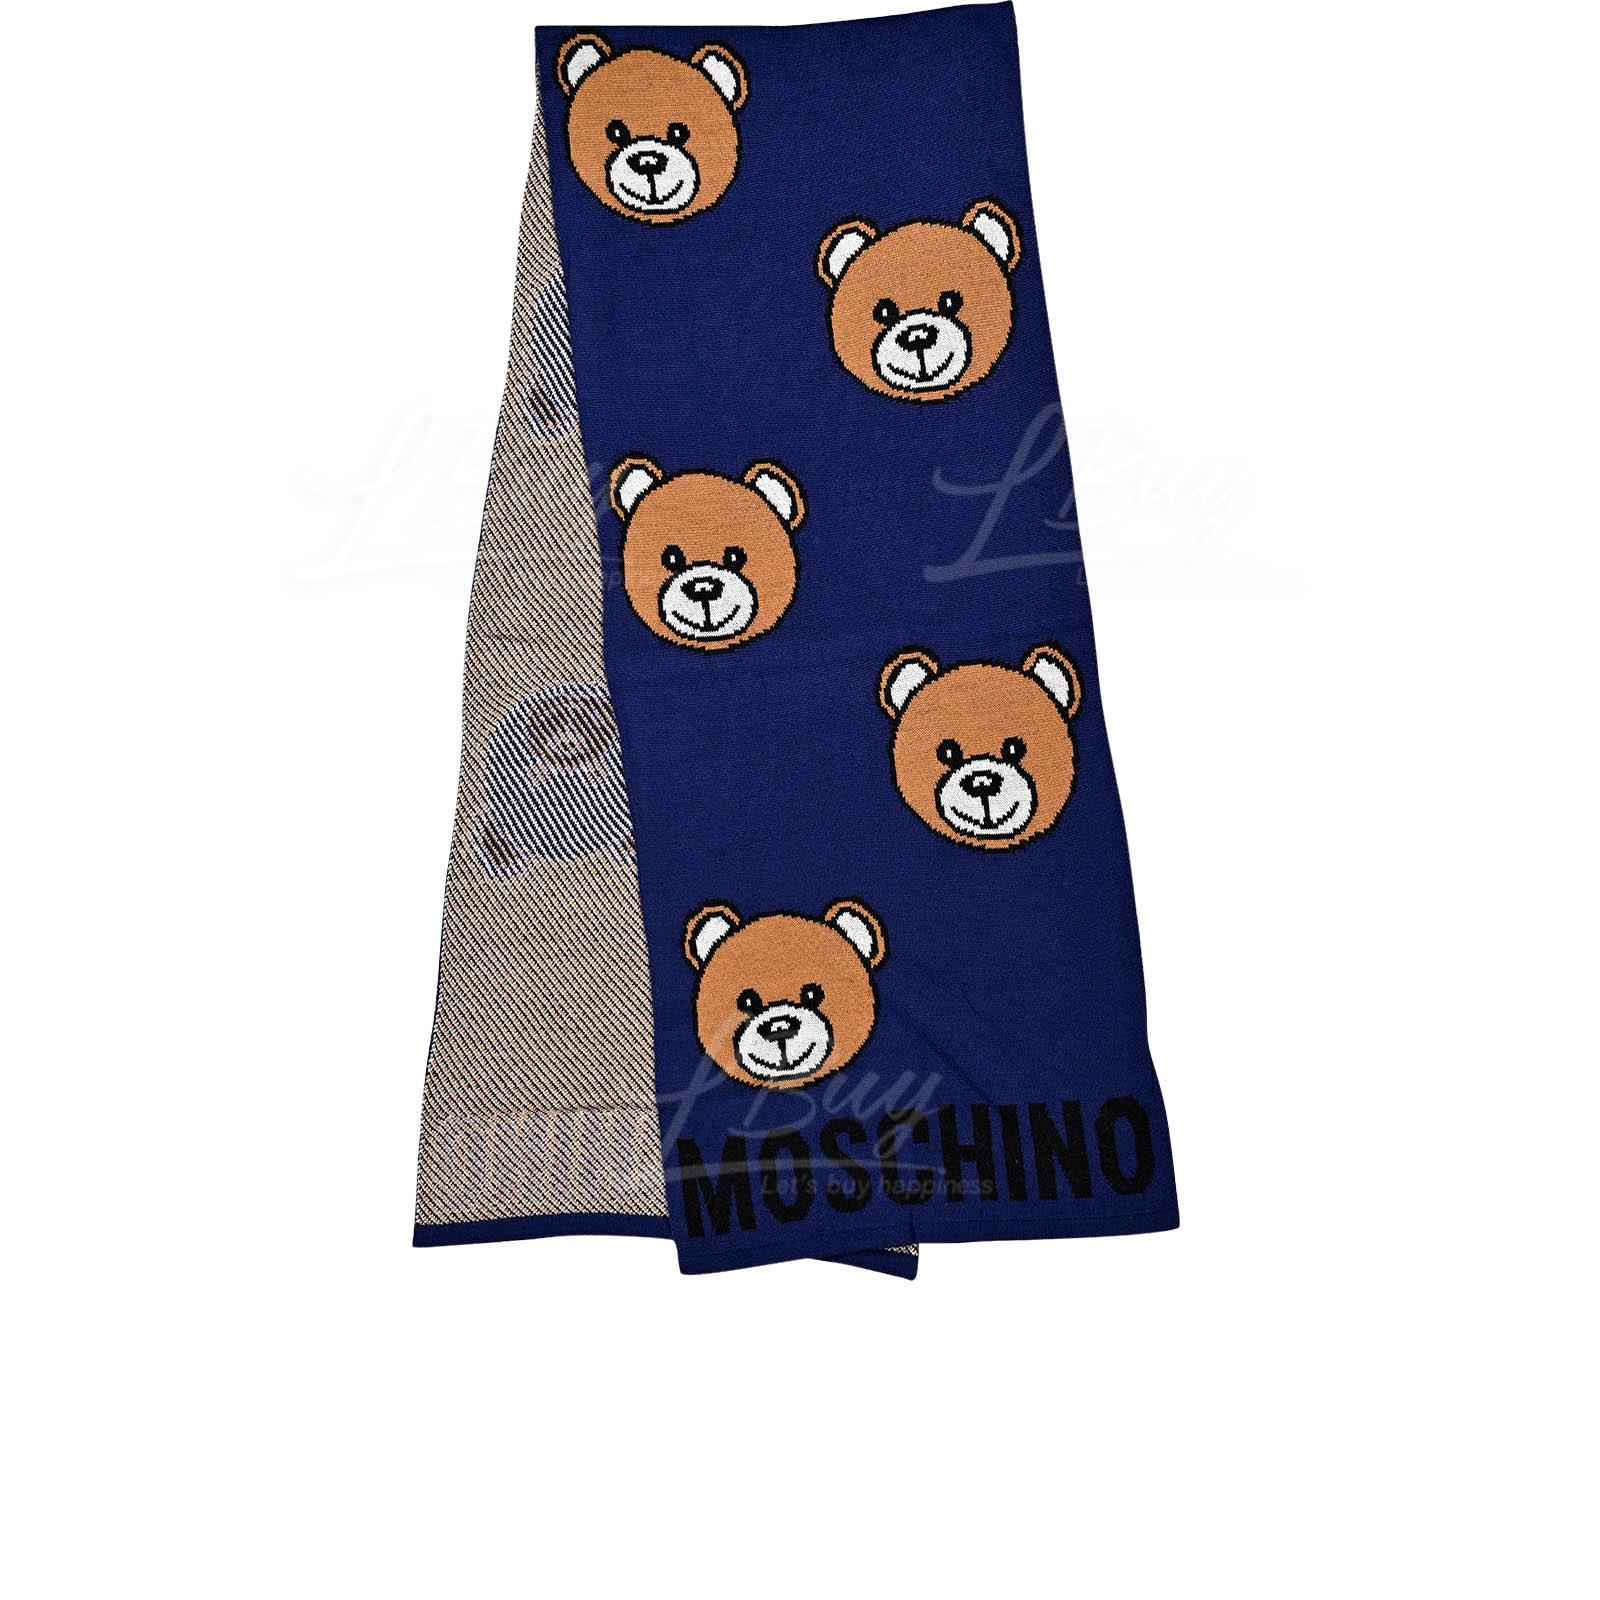 Moschino 泰迪熊藍色圍巾/頸巾